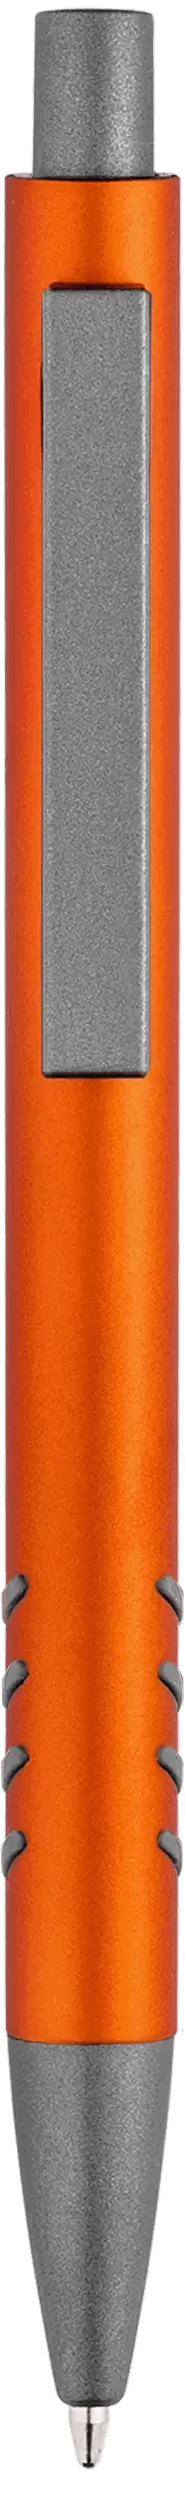 Ручка MOKKO TITAN Оранжевая 1135-05